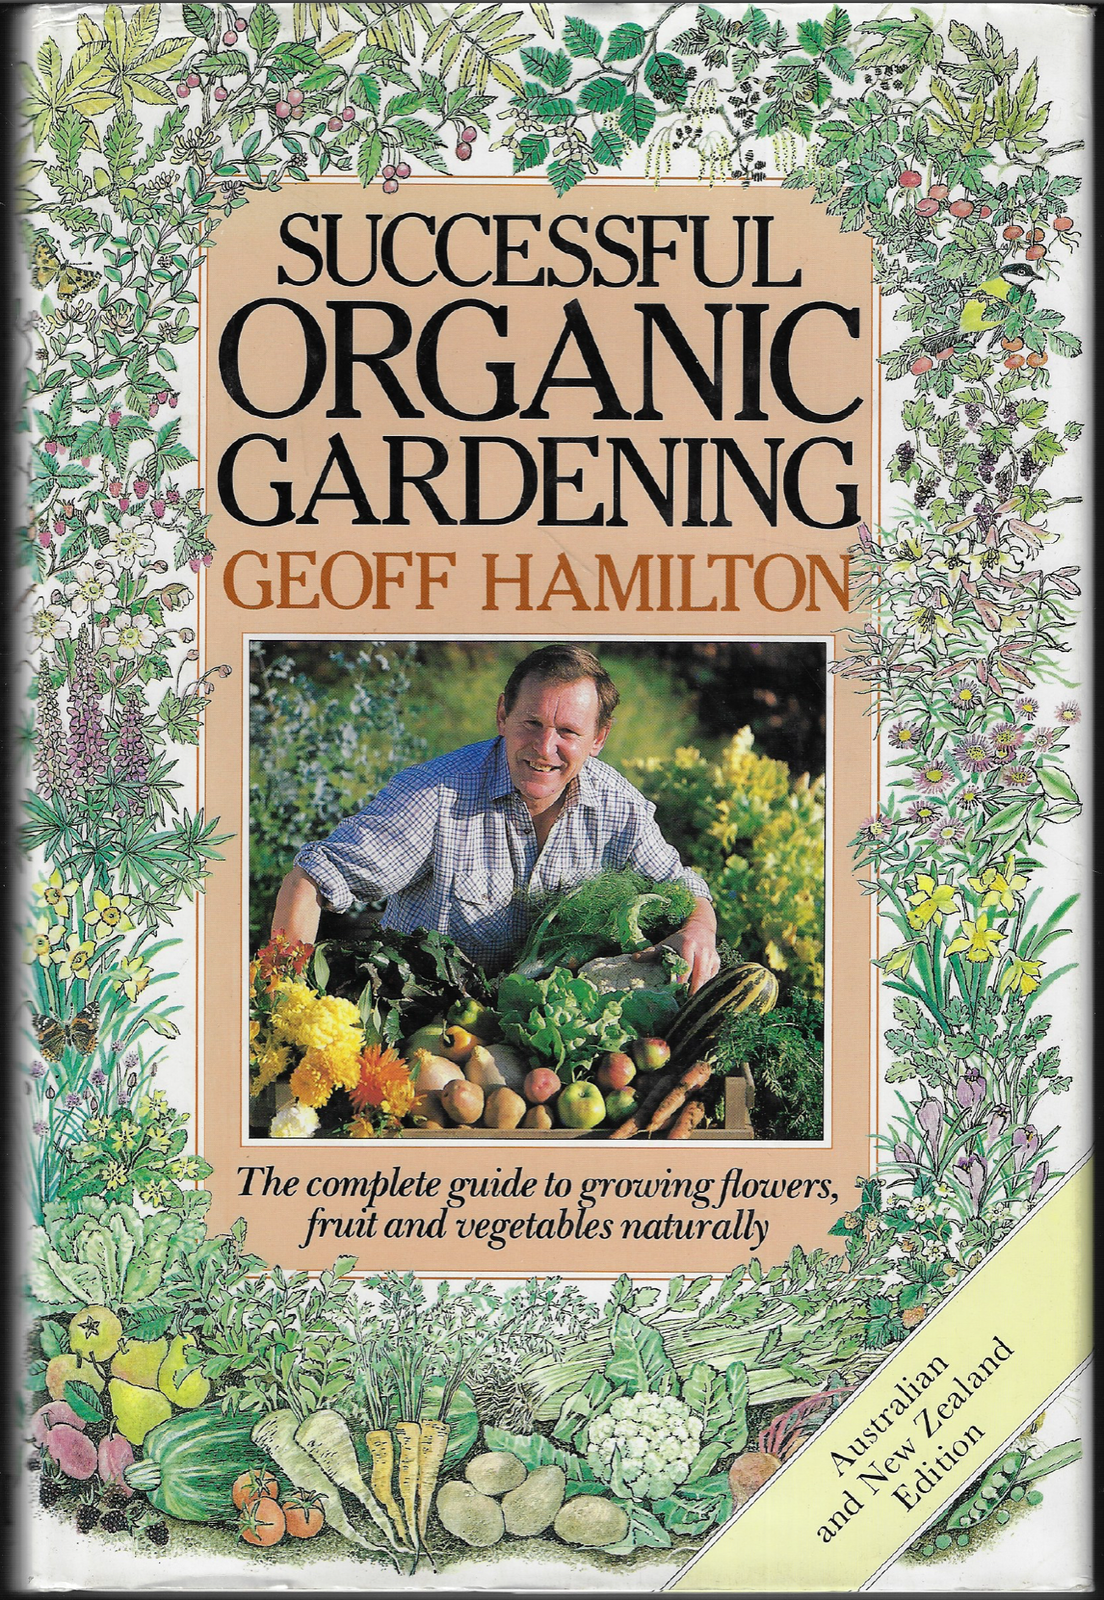 Successful Organic Gardening 2nd Edition